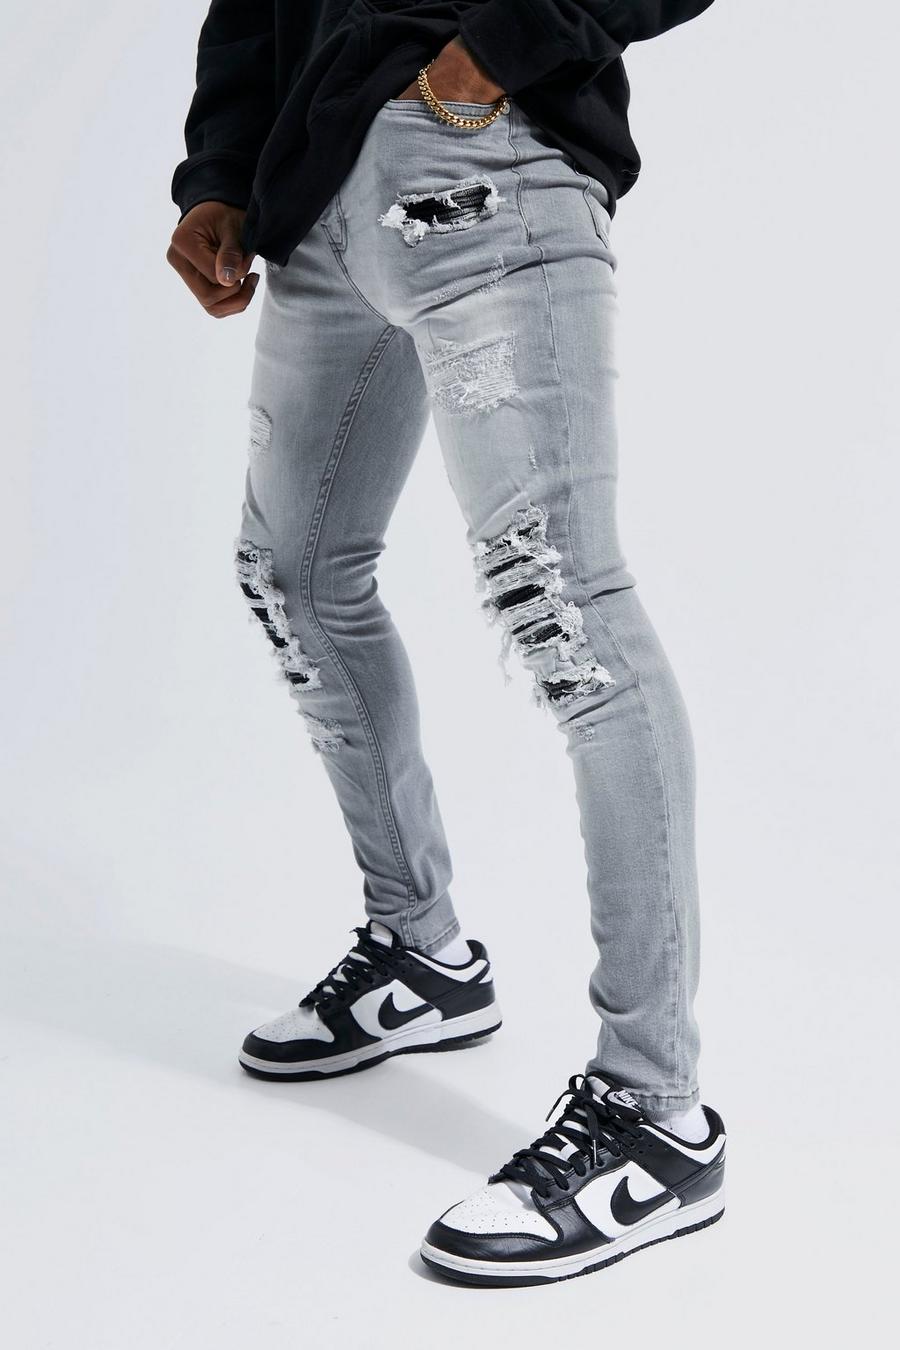 zwavel Vernauwd Razernij Super Skinny Stretch Rip & Repair Check Jeans | boohoo